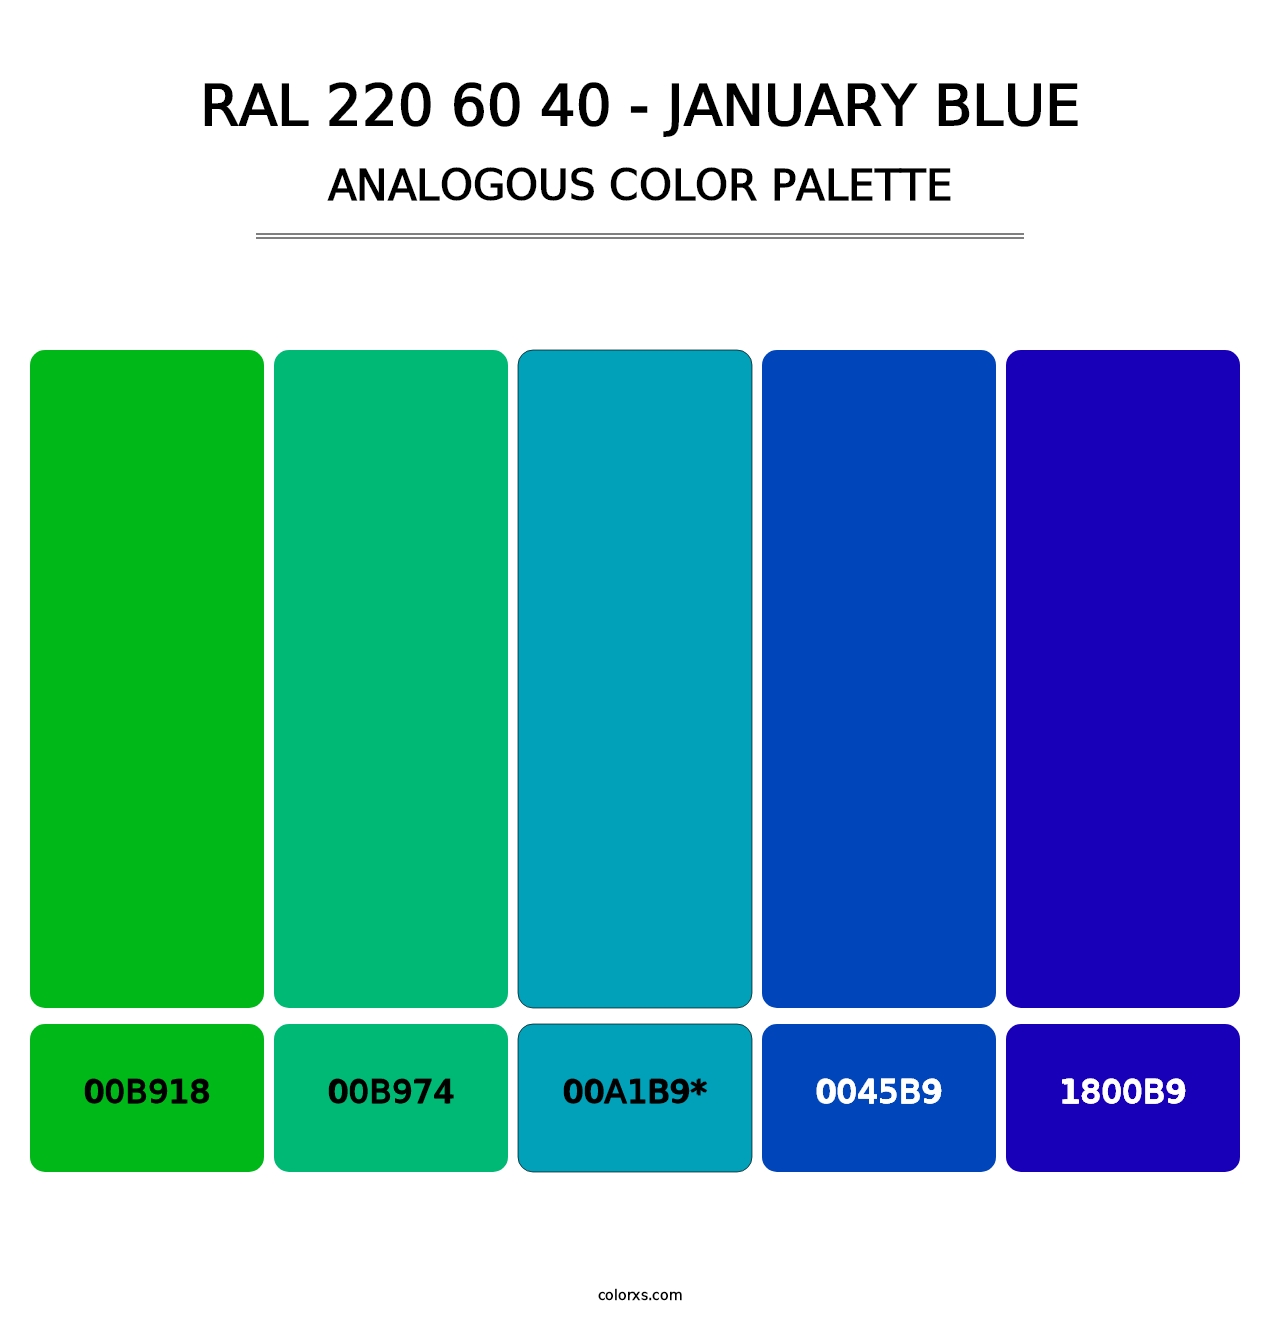 RAL 220 60 40 - January Blue - Analogous Color Palette